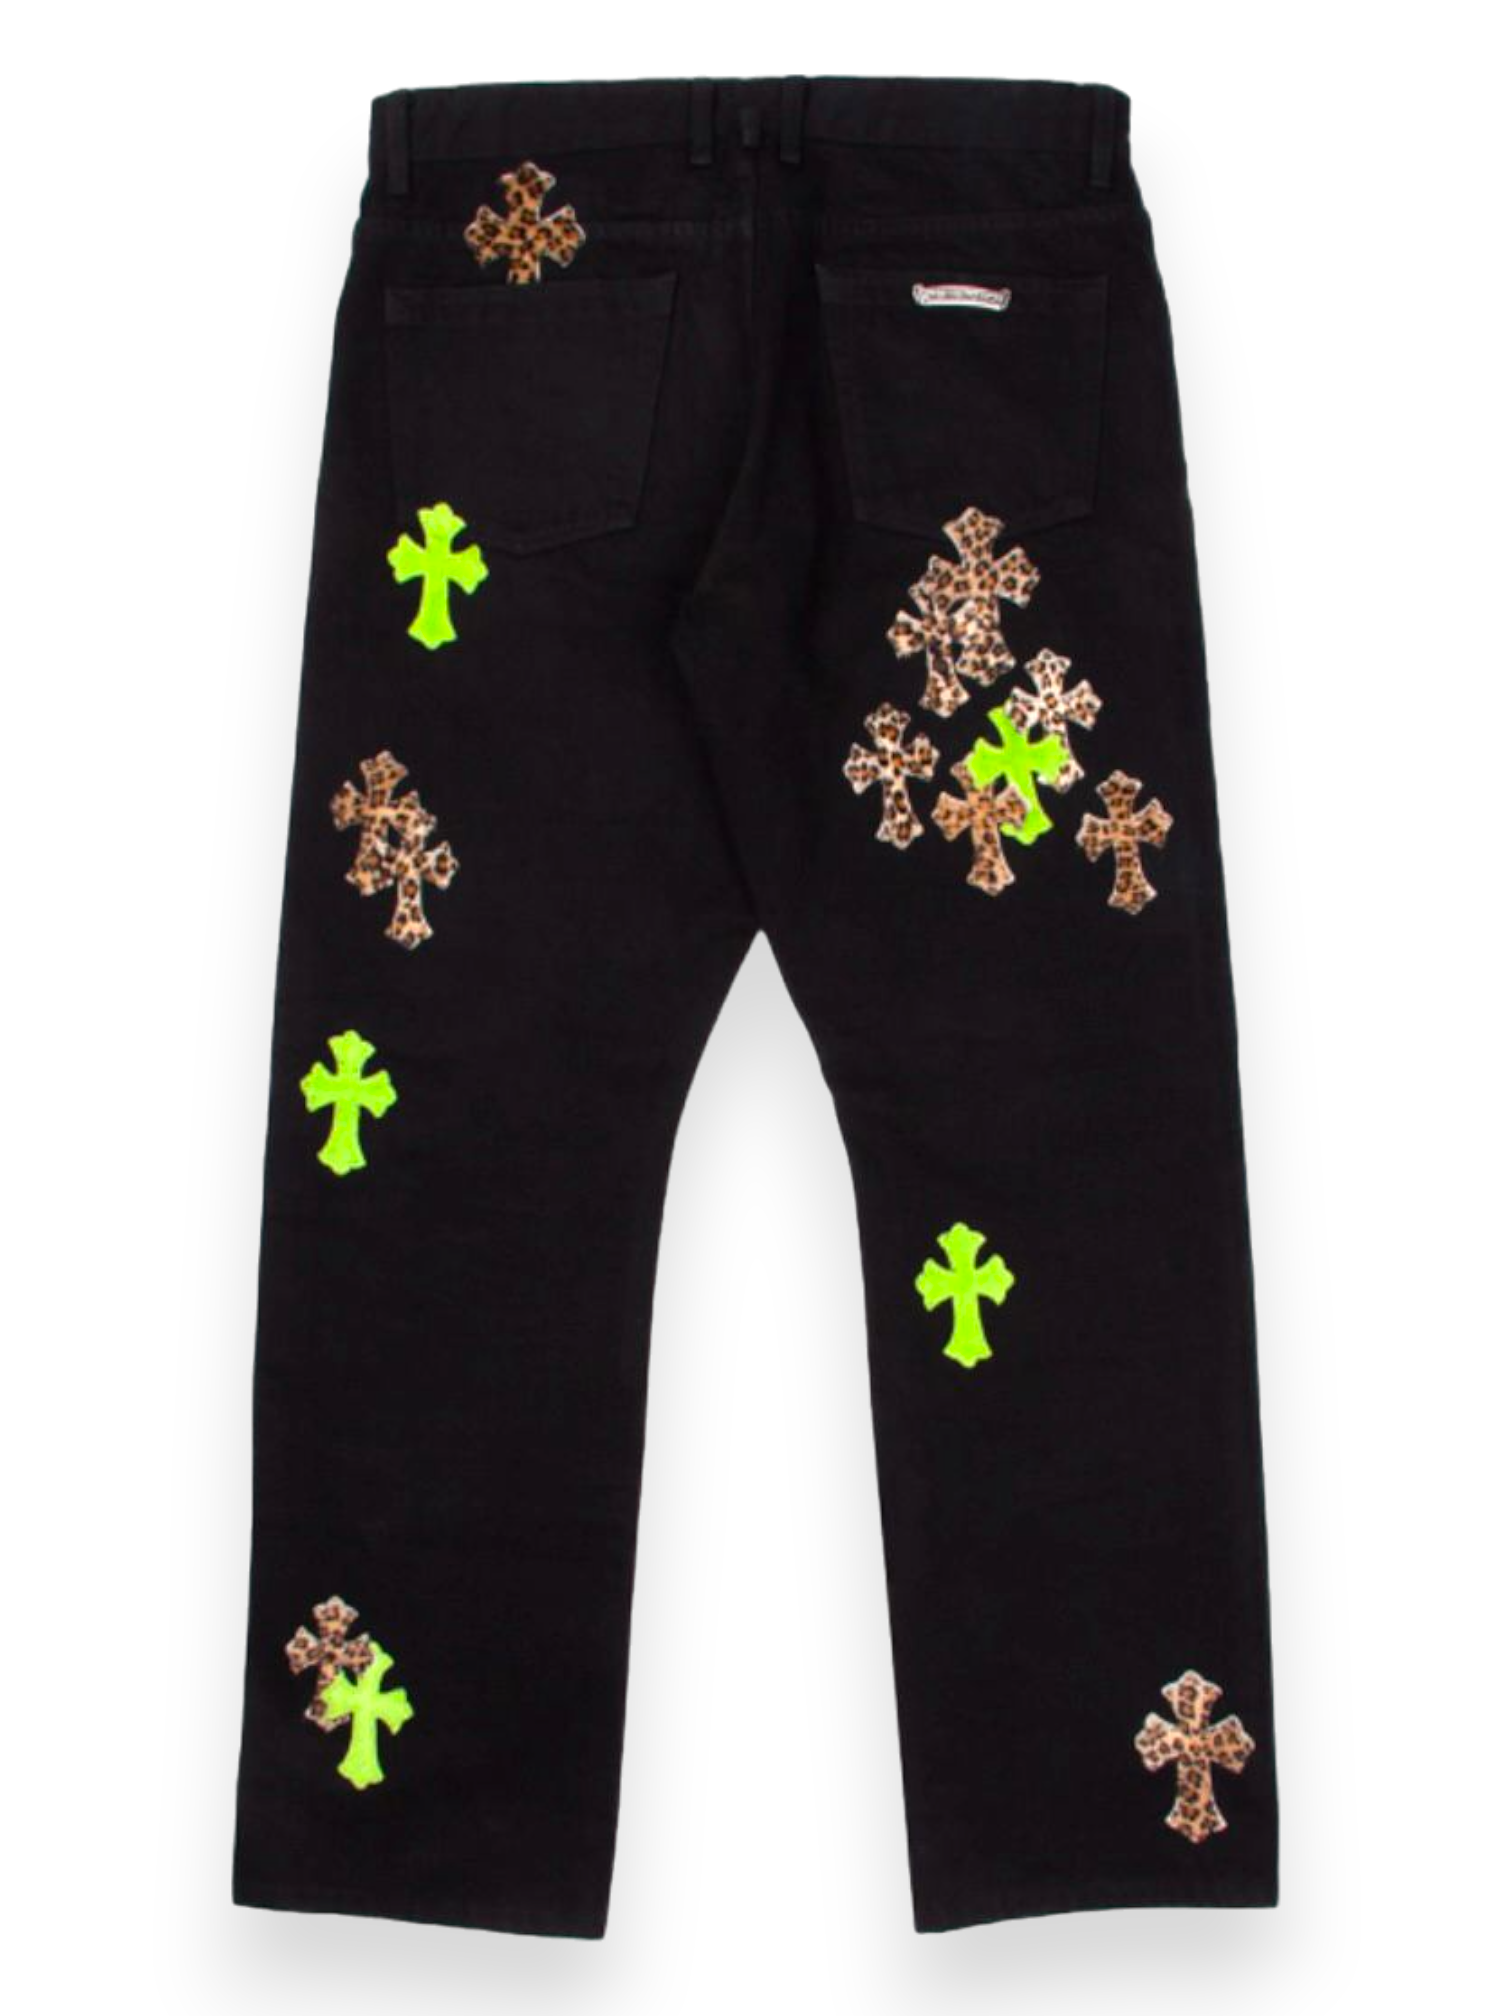 Chrome Hearts Green Cheetah Cross Patch Black Levi’s Denim Jeans